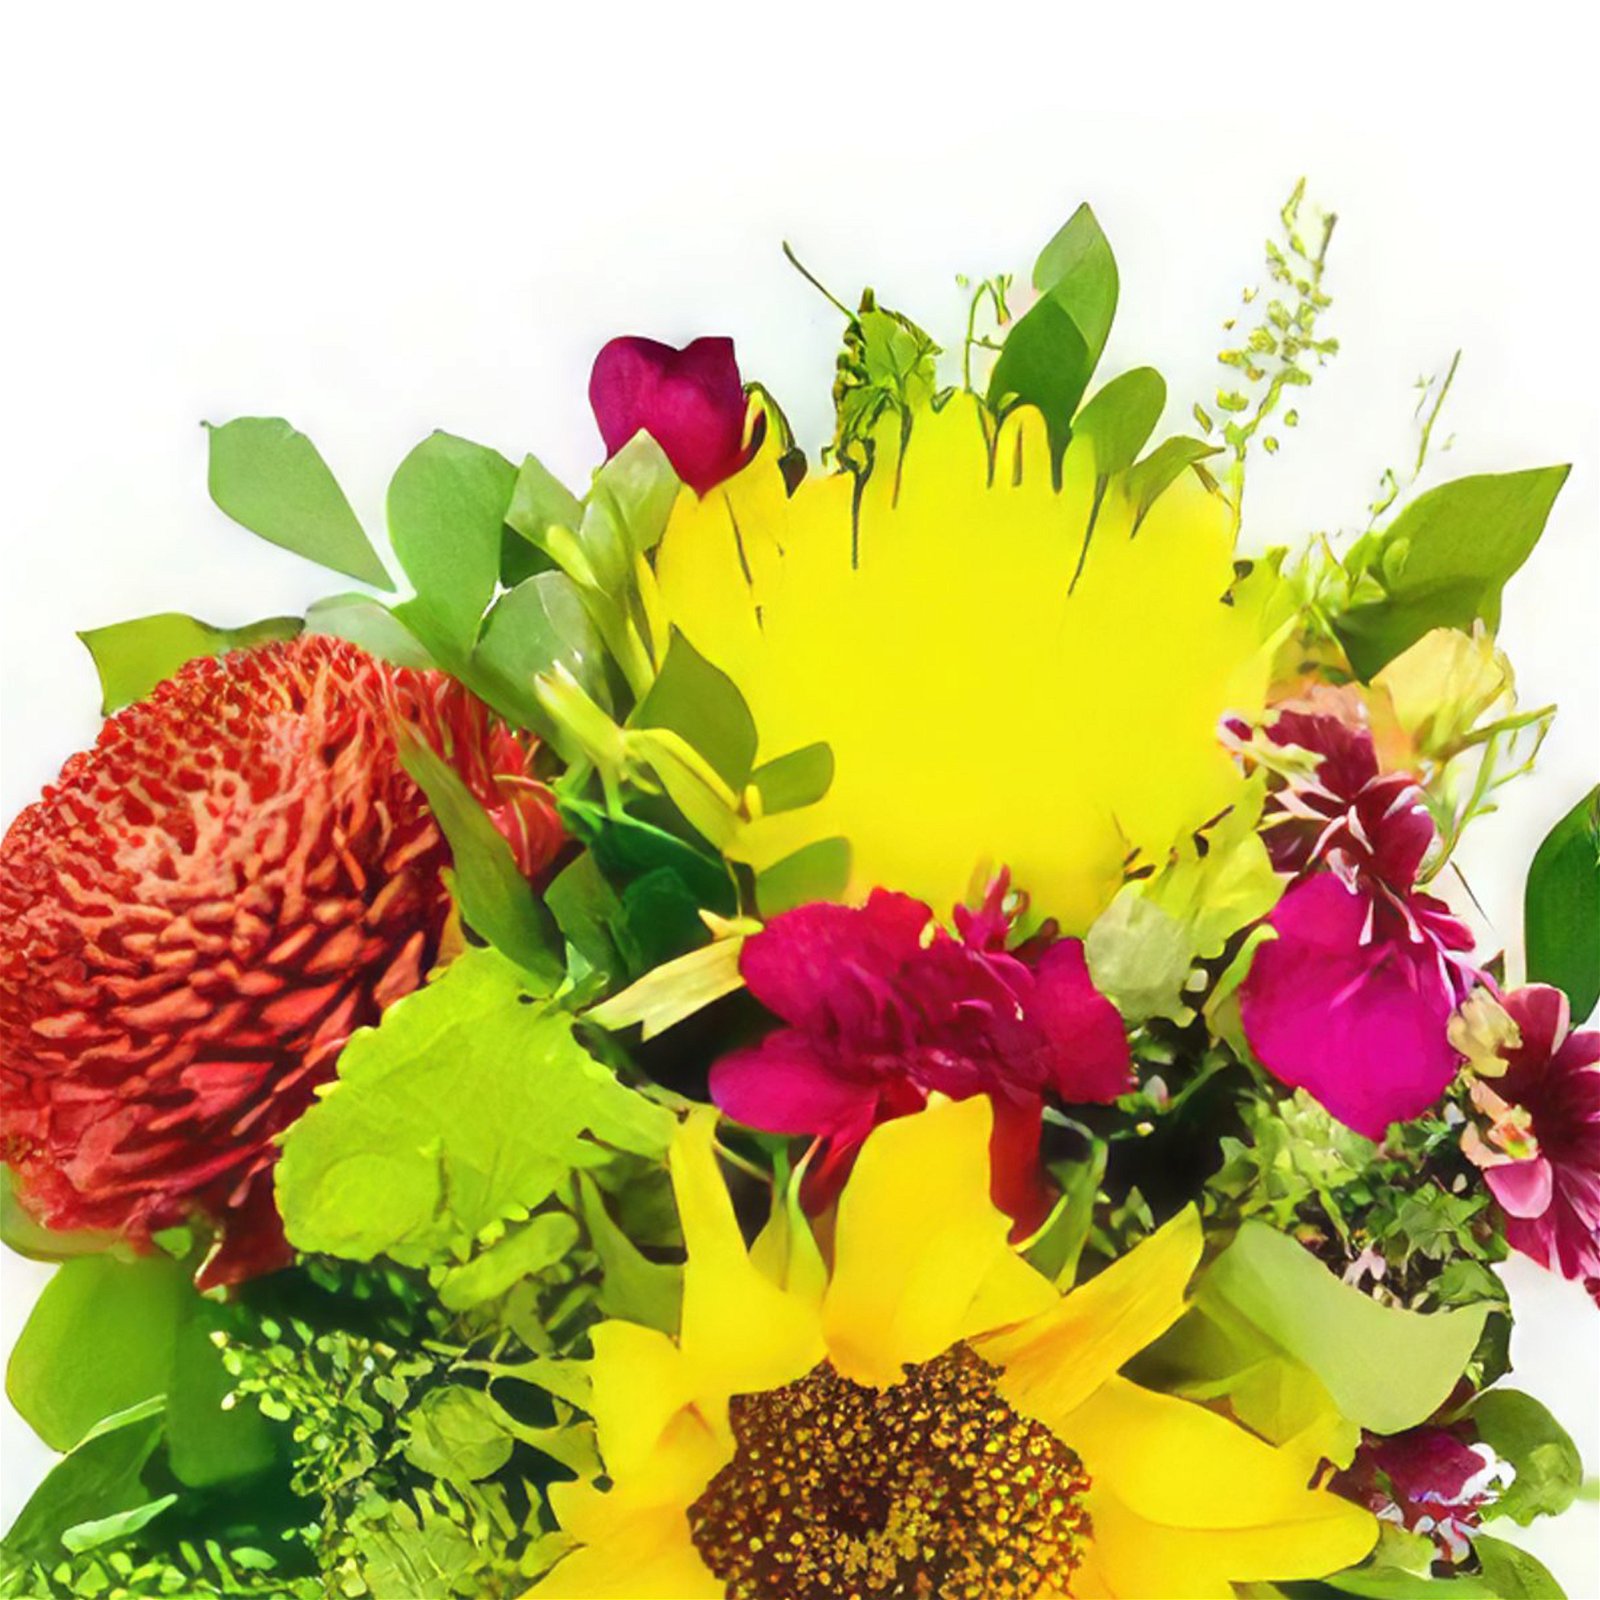 Bijaru flowers  -  Spring love Flower Bouquet/Arrangement